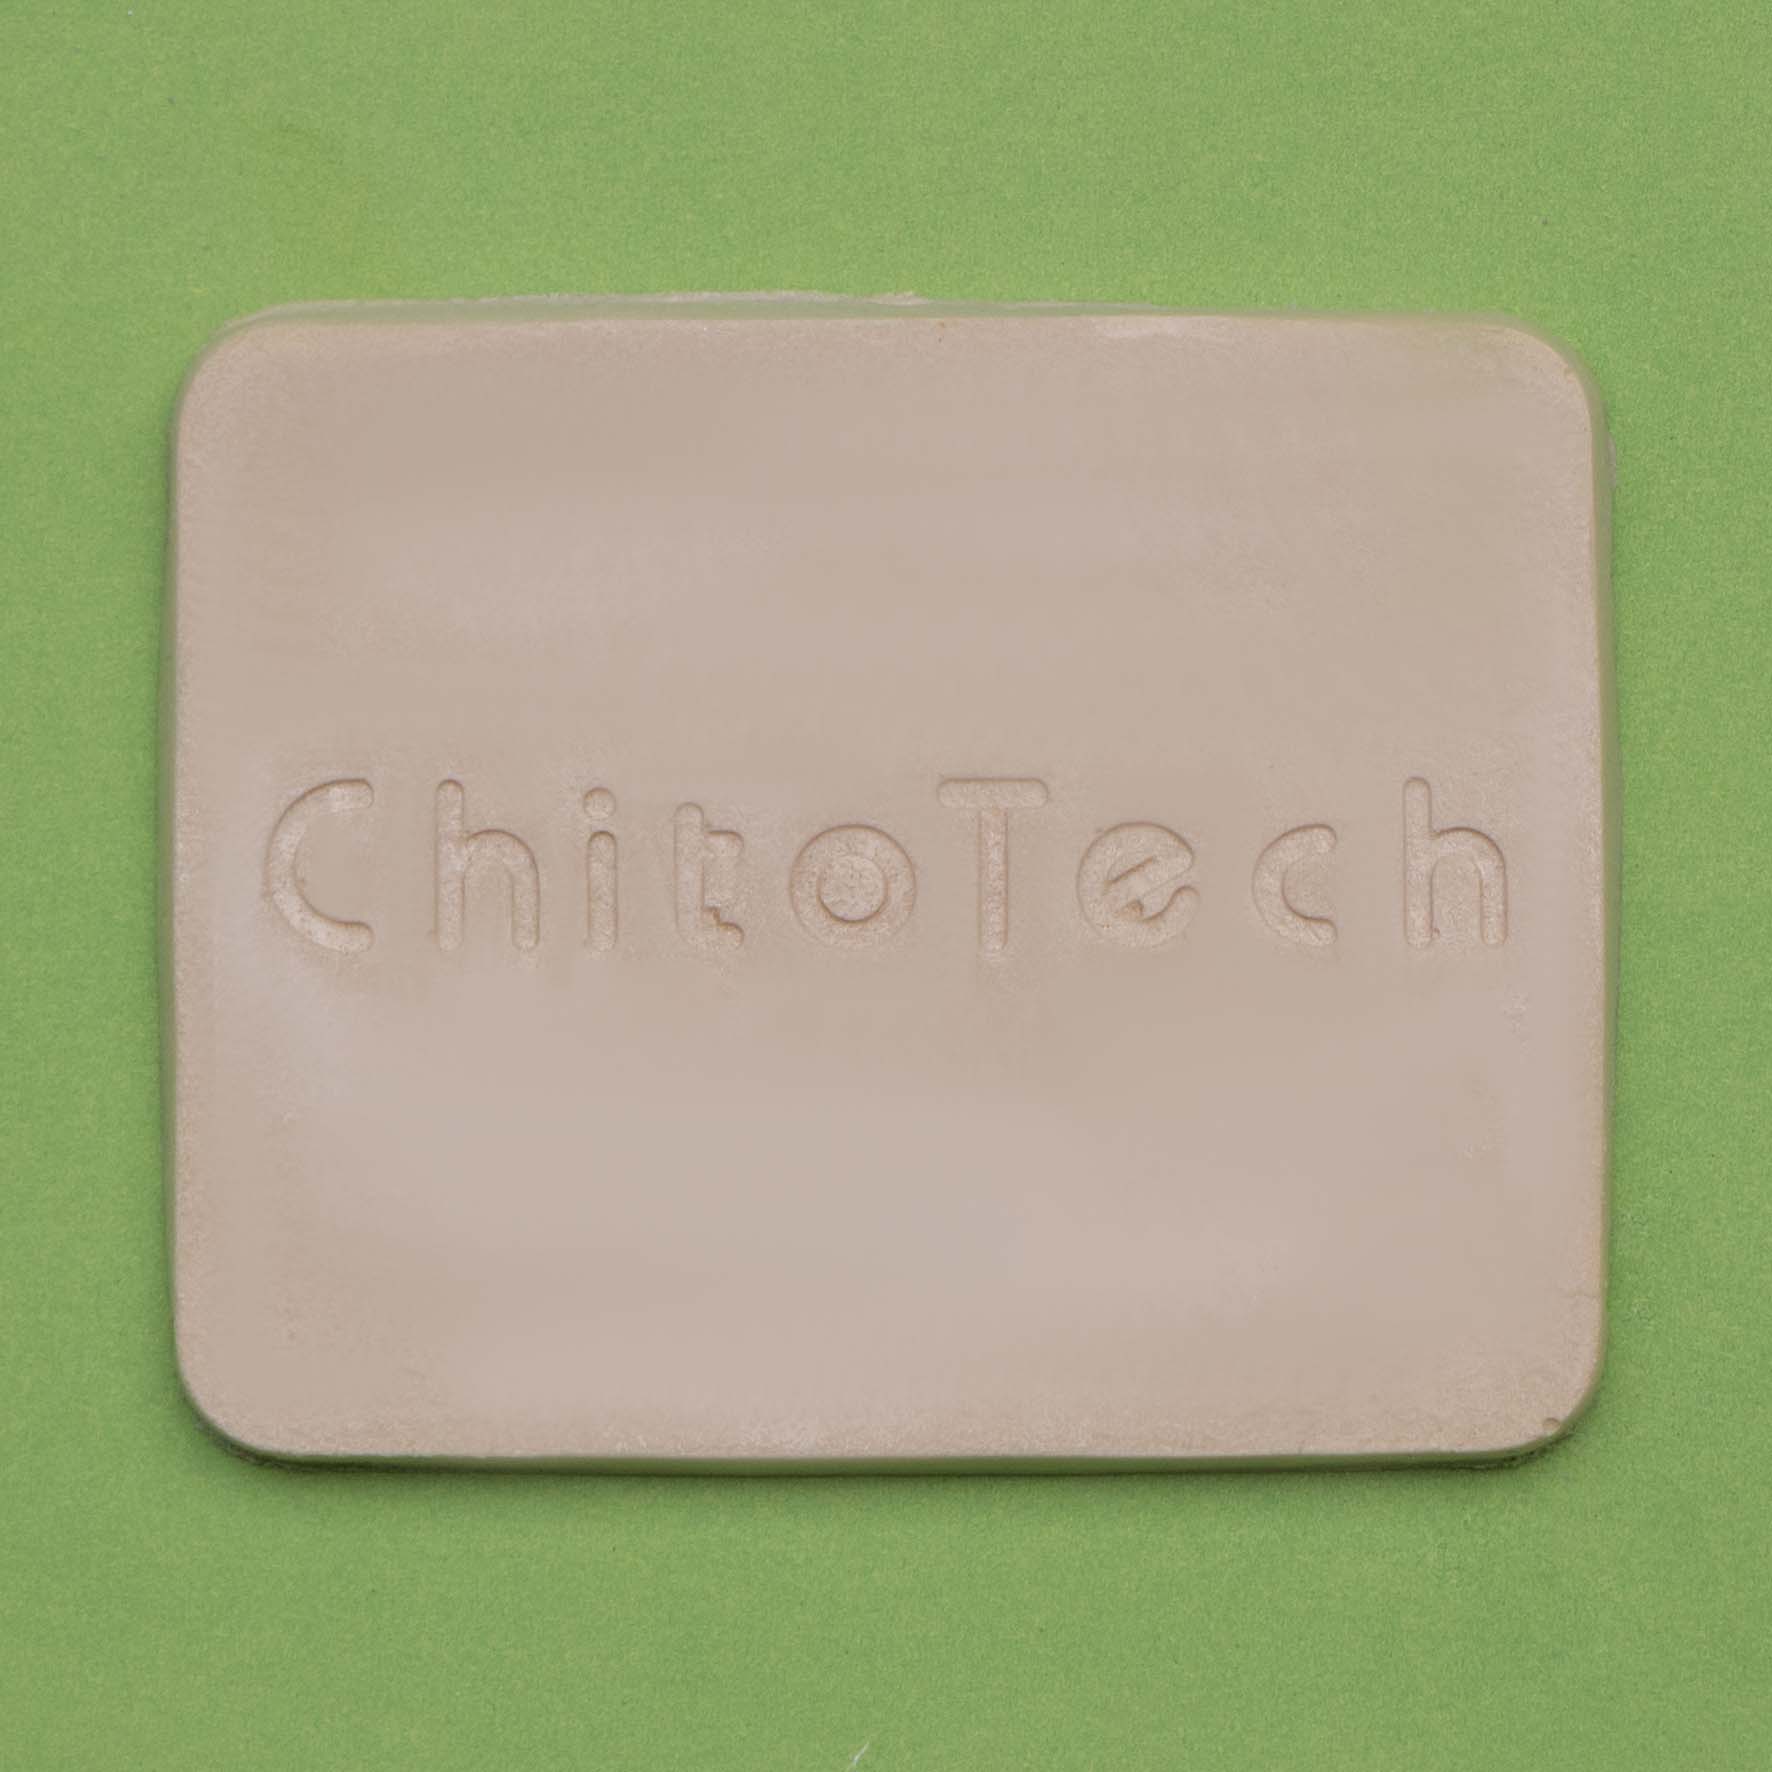 ChitoHeal Foam Dressing